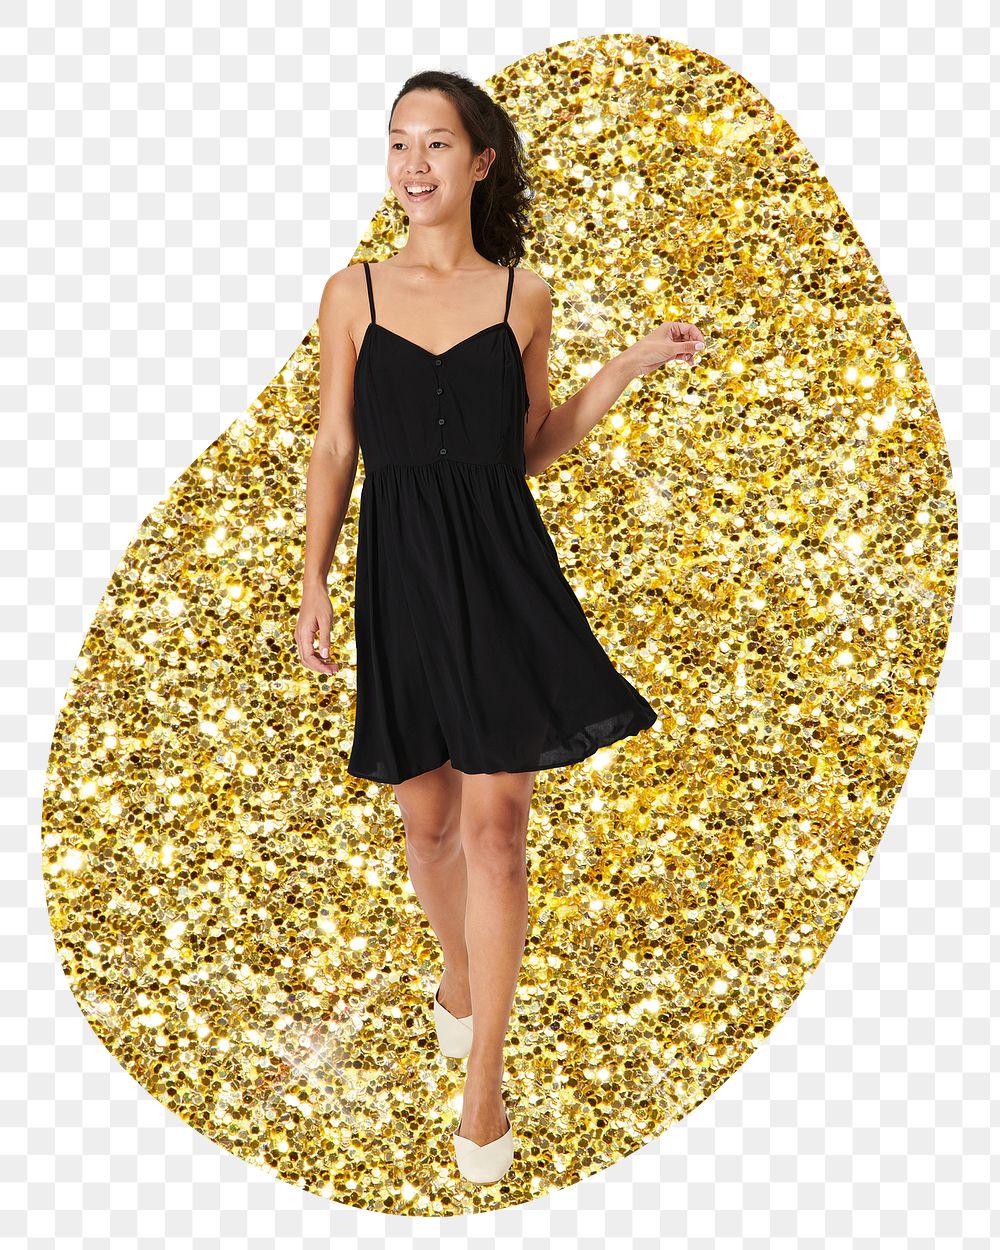 Png Asian woman in black dress sticker, gold glitter blob shape, transparent background